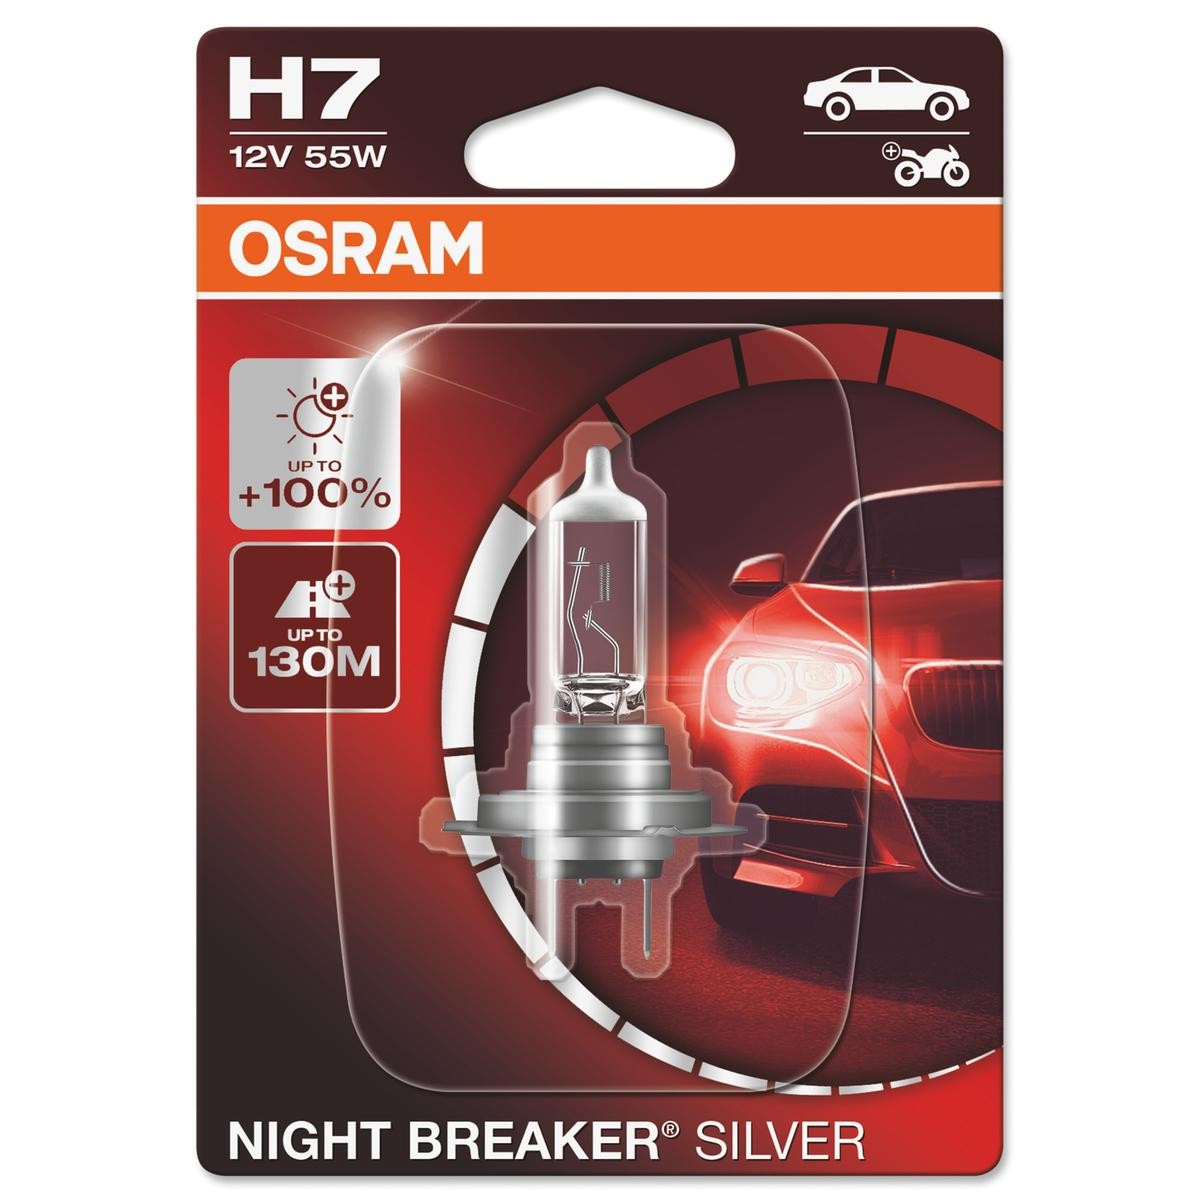 64210NBS-01B OSRAM NIGHT BREAKER SILVER H7 12V 55W Halogen